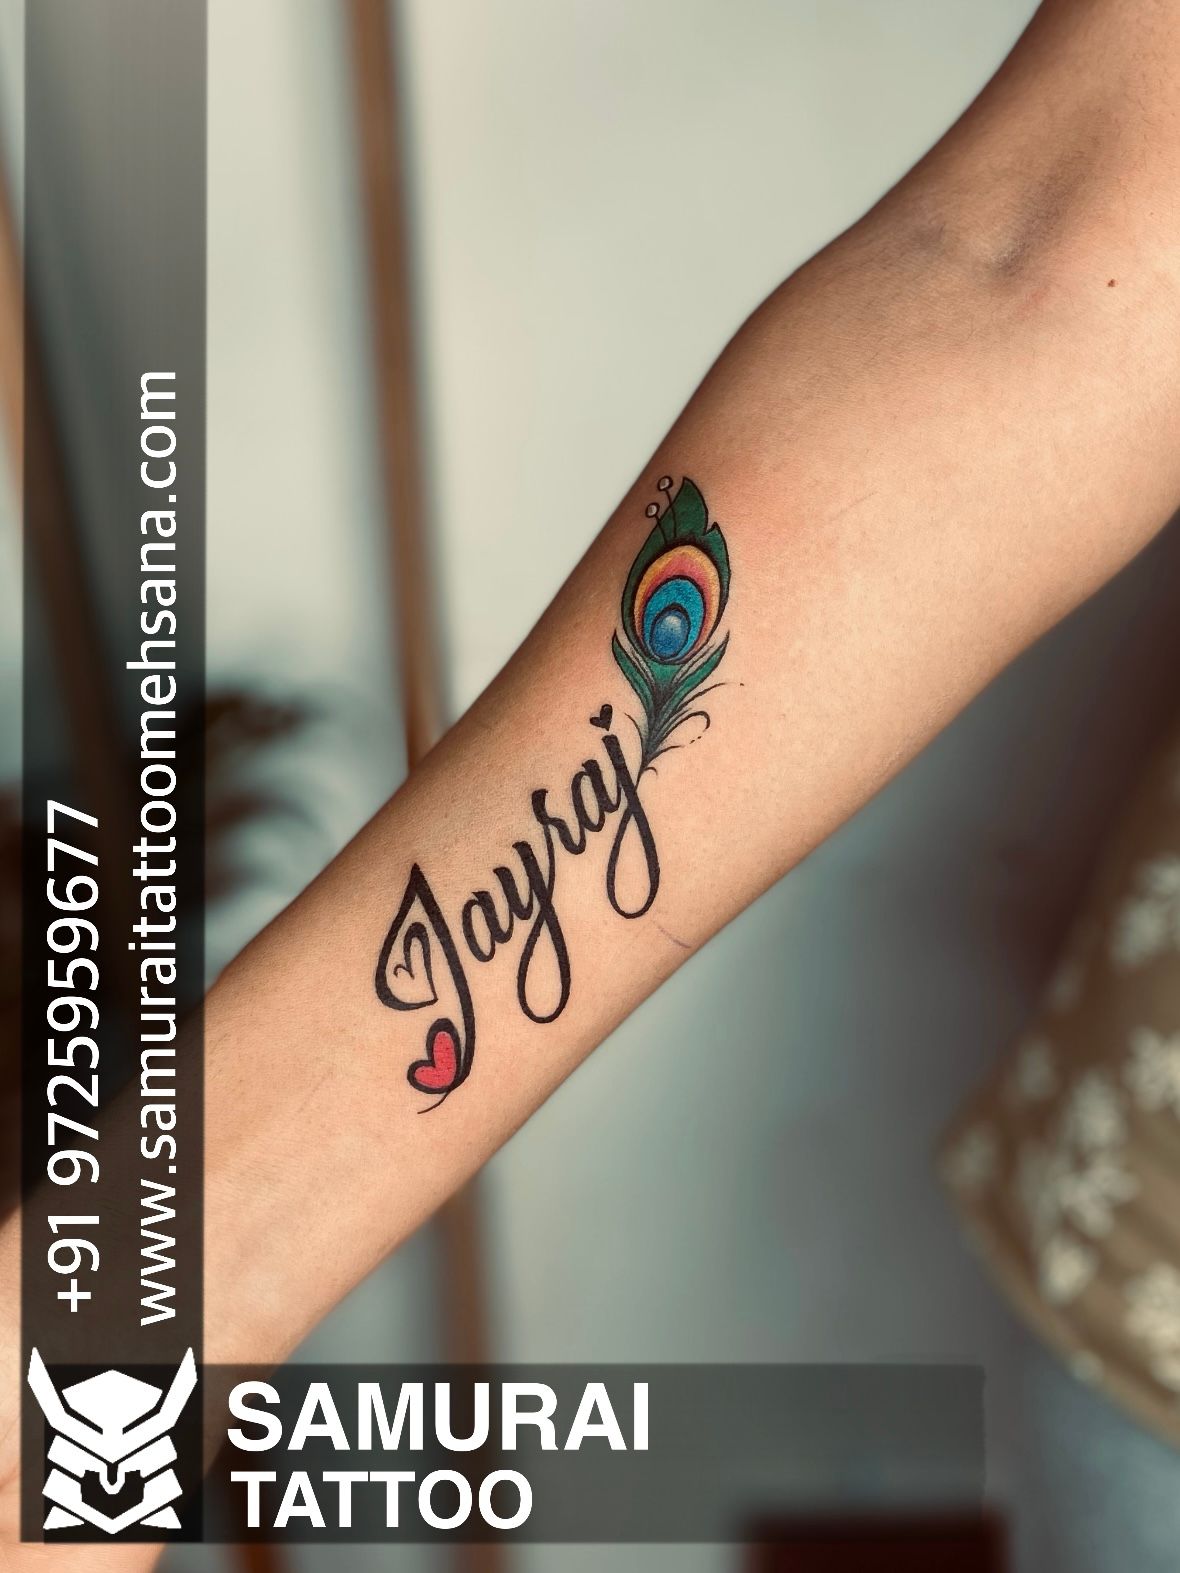 Tattoo uploaded by Vipul Chaudhary • Wings tattoo |Wings tattoo design  |Wings tattoo with name |wings tattoo for boys |angle tattoo • Tattoodo